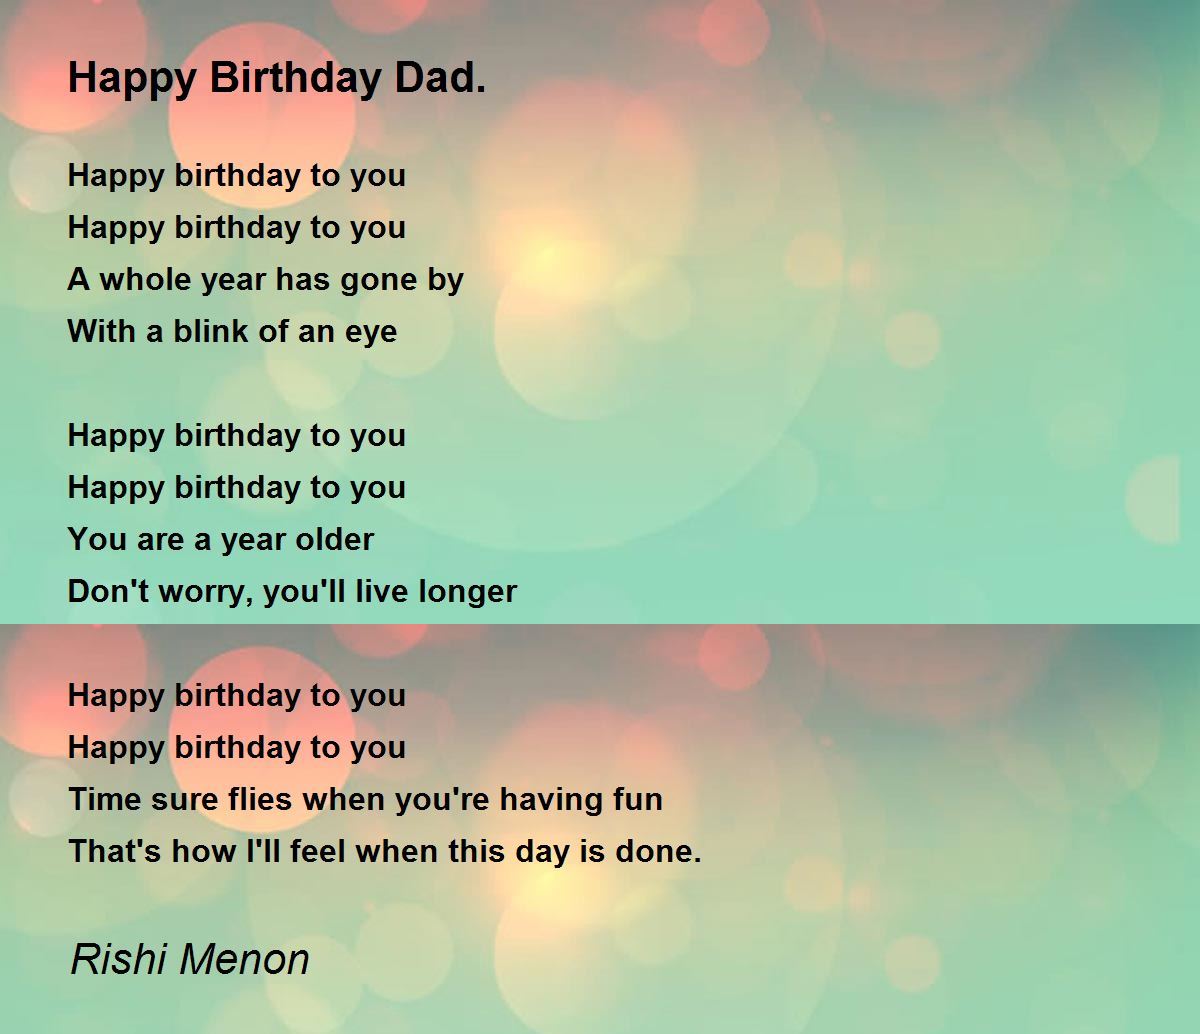 Happy Birthday Dad Poem By Rishi Menon